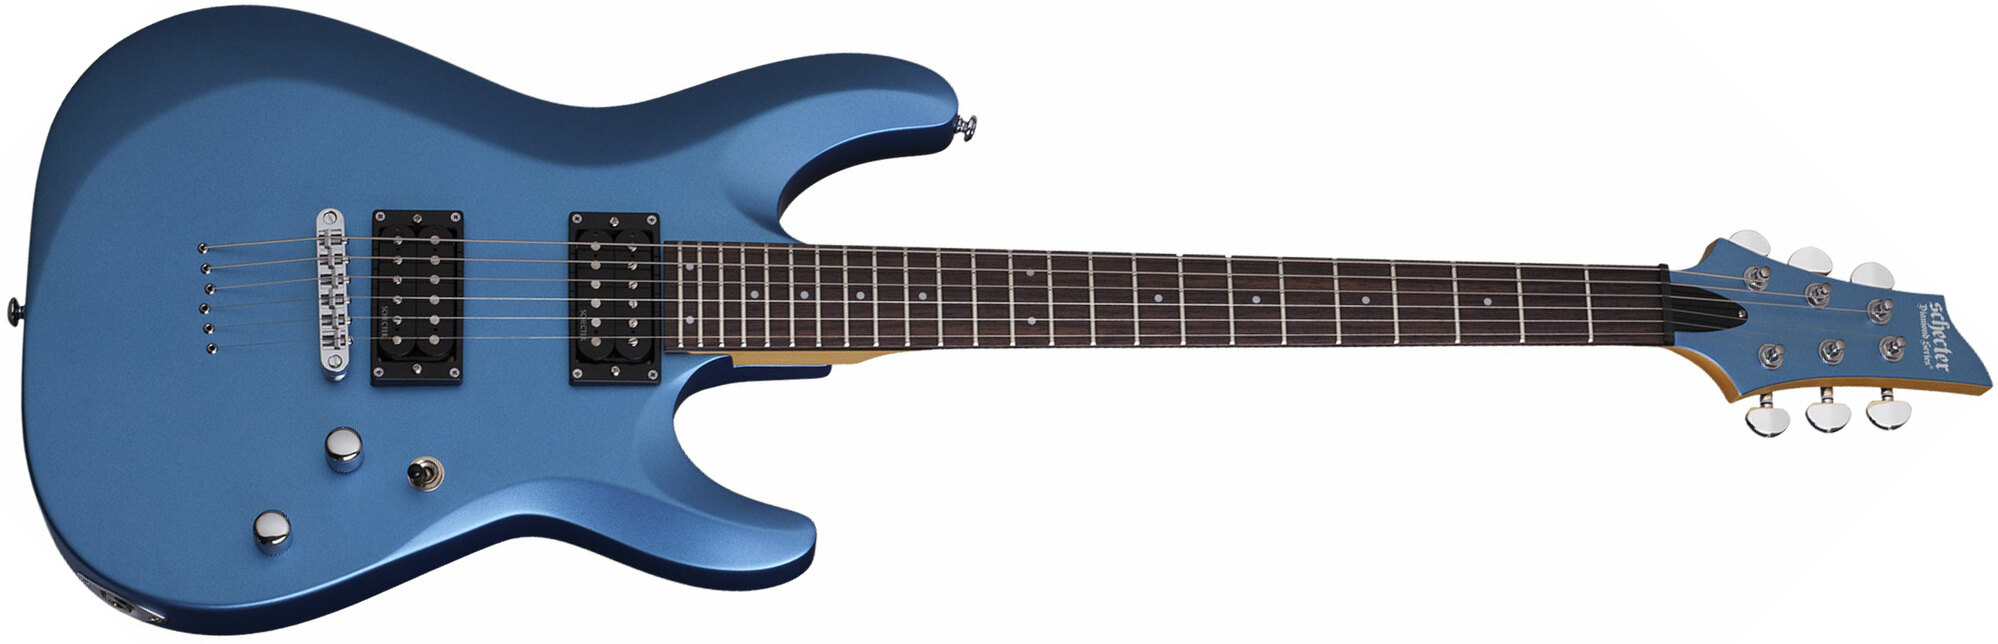 Schecter C-6 Deluxe 2h Ht Rw - Satin Metallic Light Blue - Guitarra eléctrica de doble corte. - Main picture